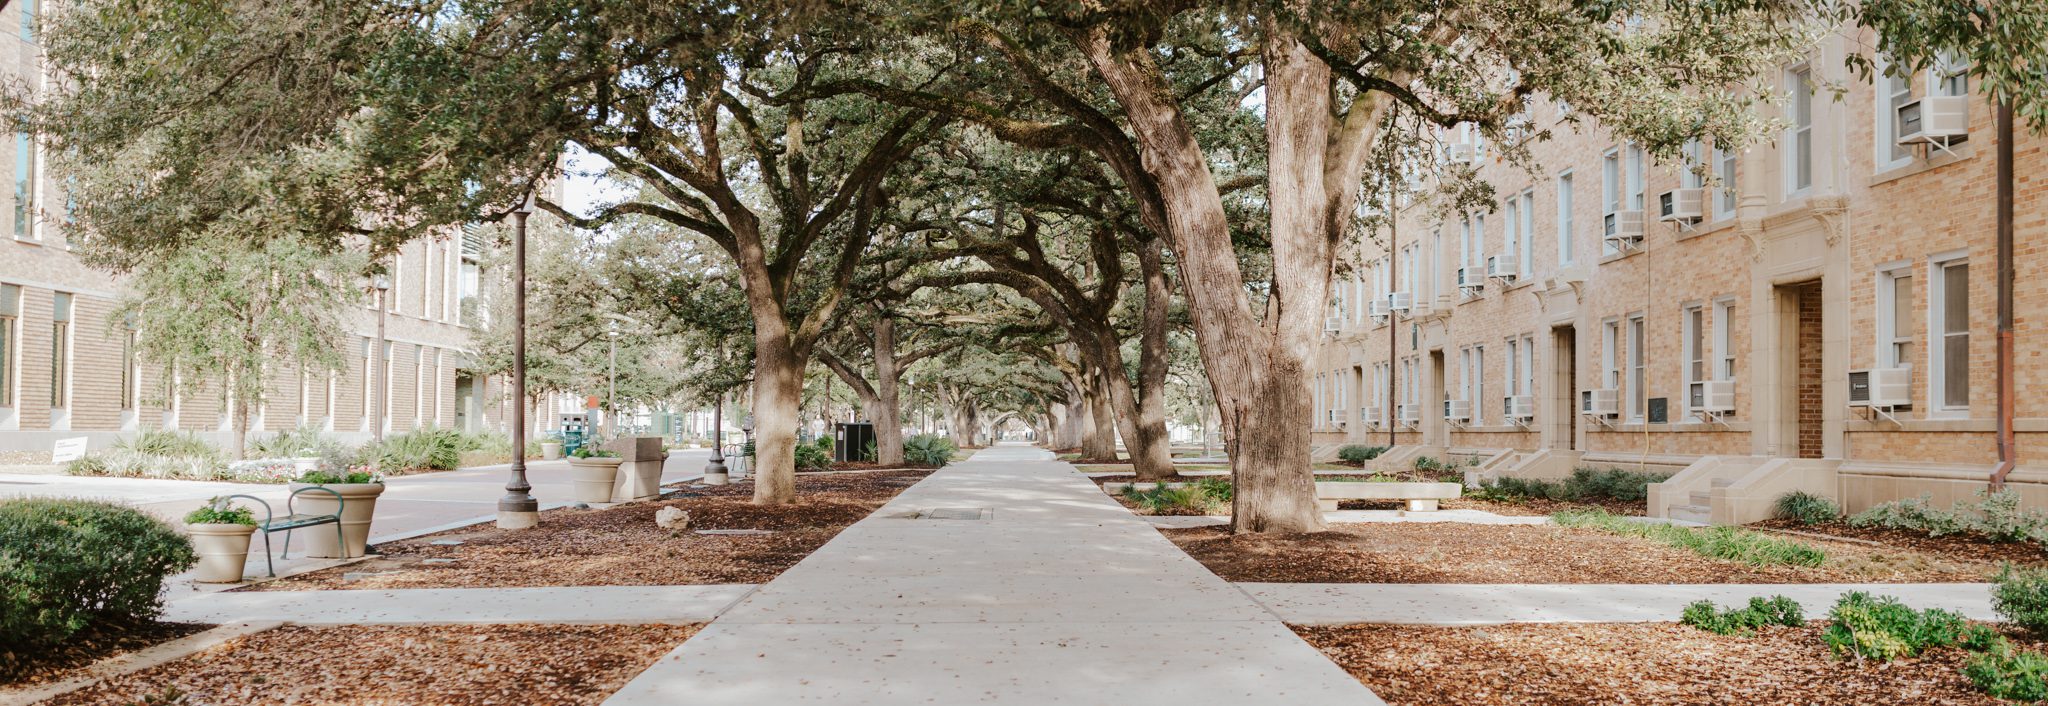 Photo of walk way on campus